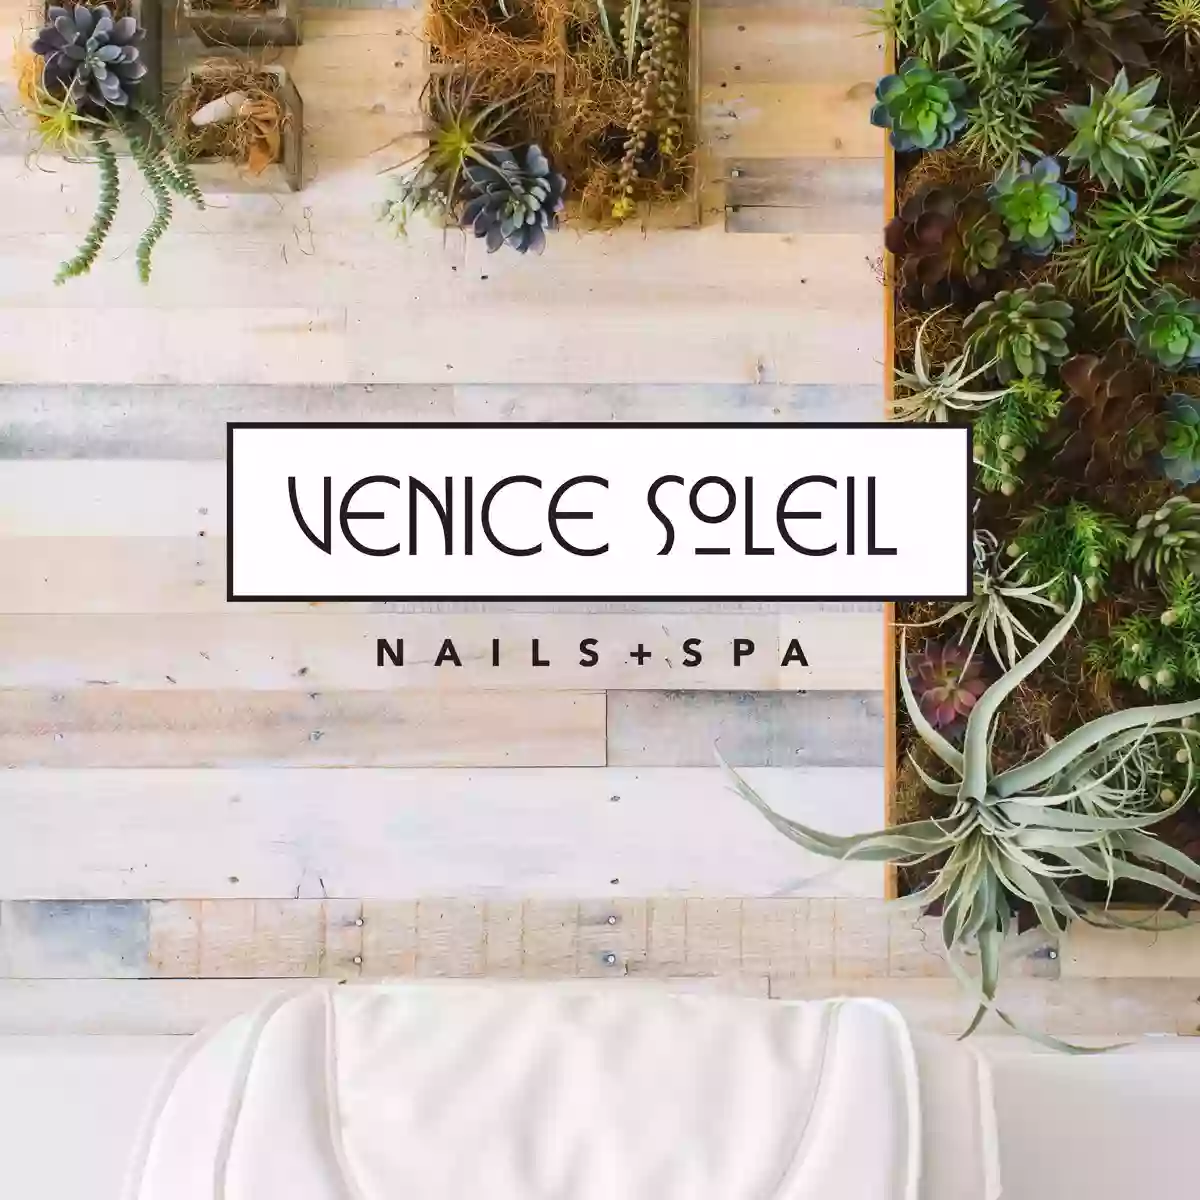 Venice Soleil Nails & Spa